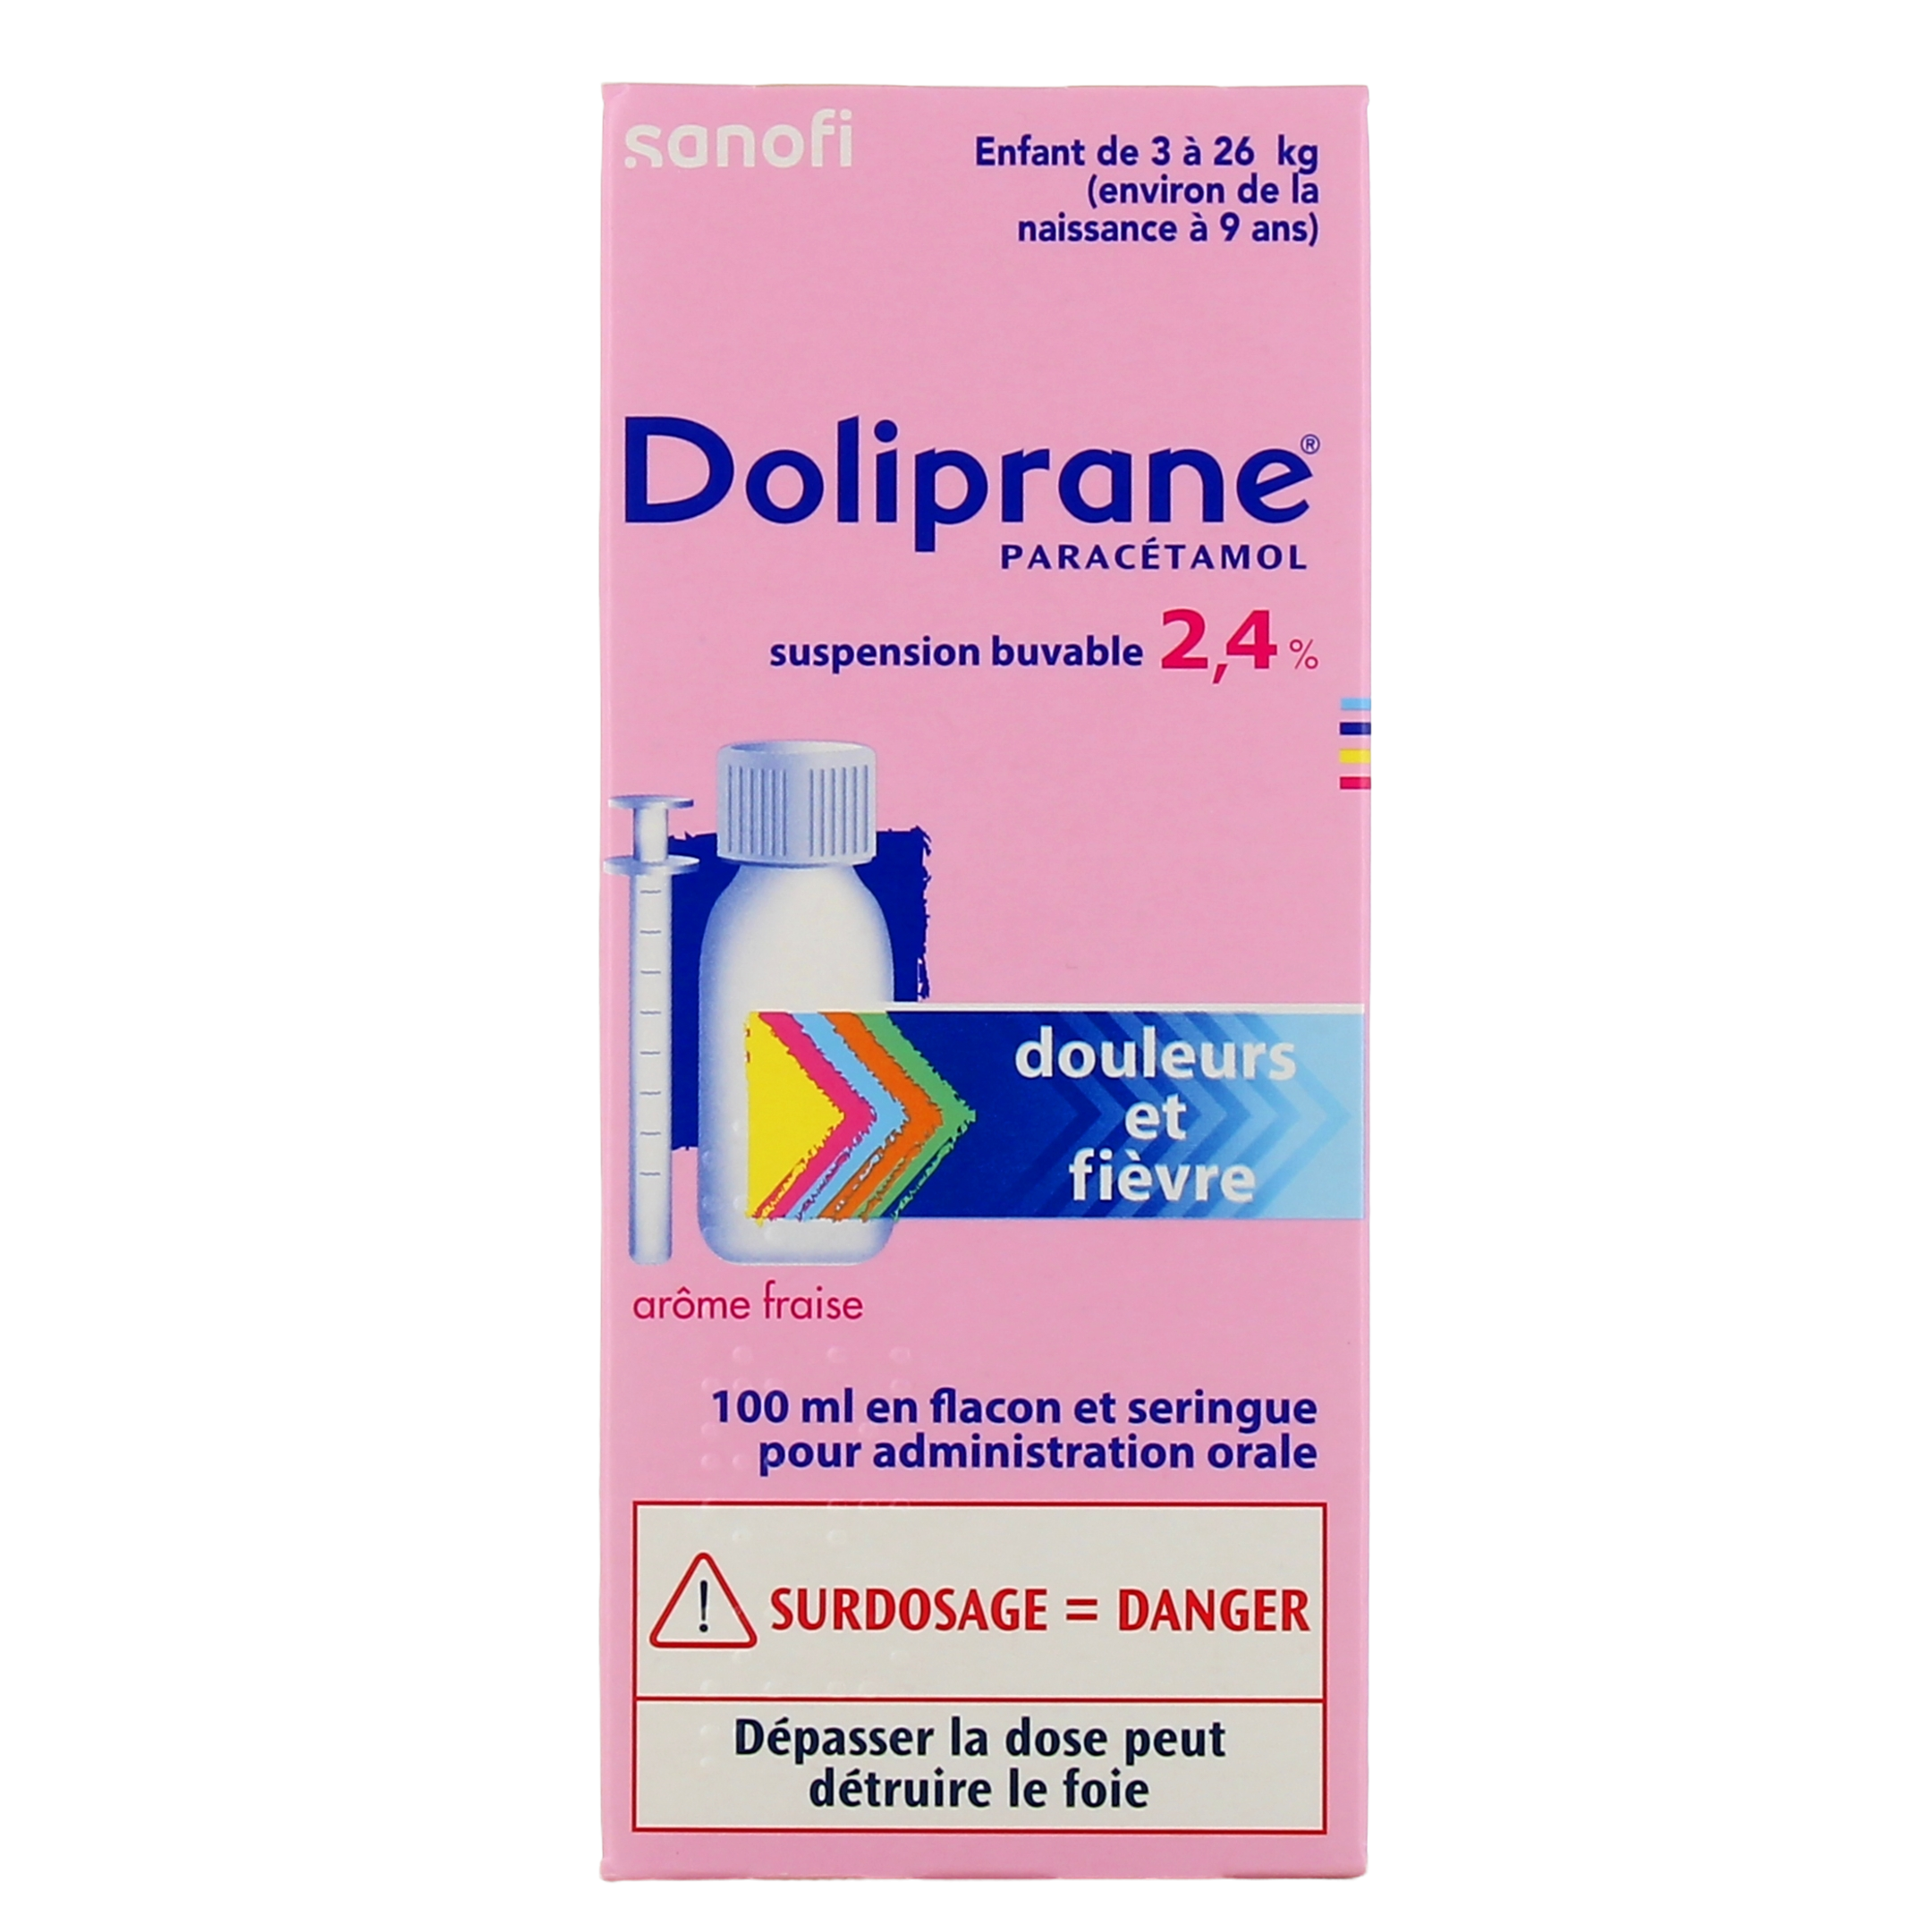 DOLIPRANE NOURRISSONS 2.4% sirop sans sucre Pharmacie du Centre 80300 ALBER